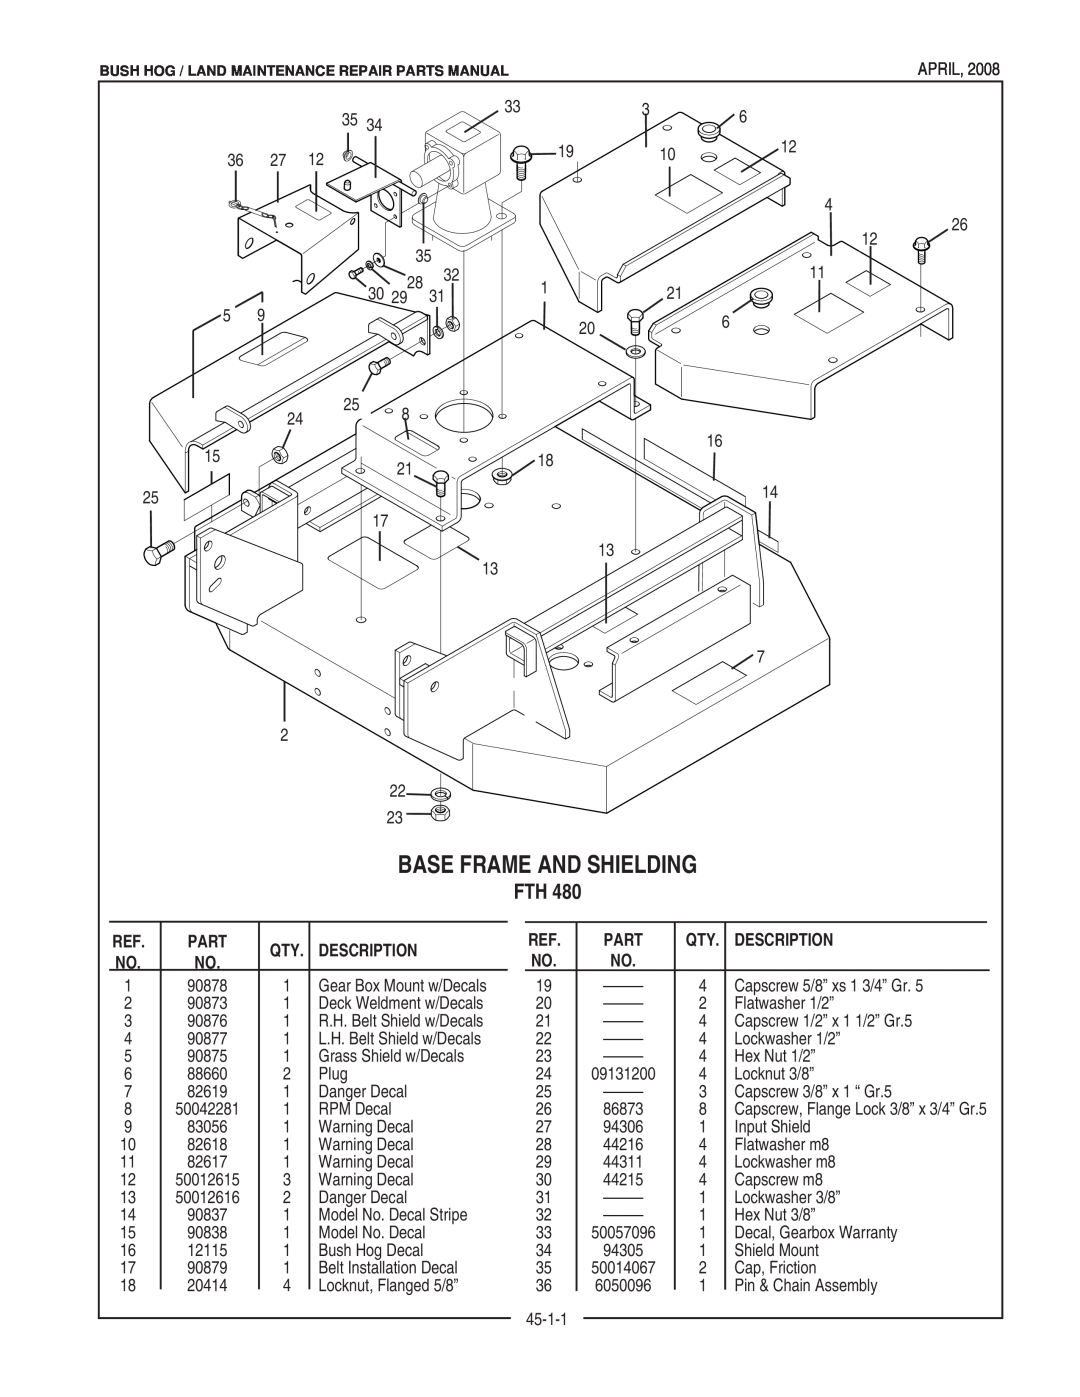 Bush Hog FTH 480 manual Base Frame And Shielding, Description 